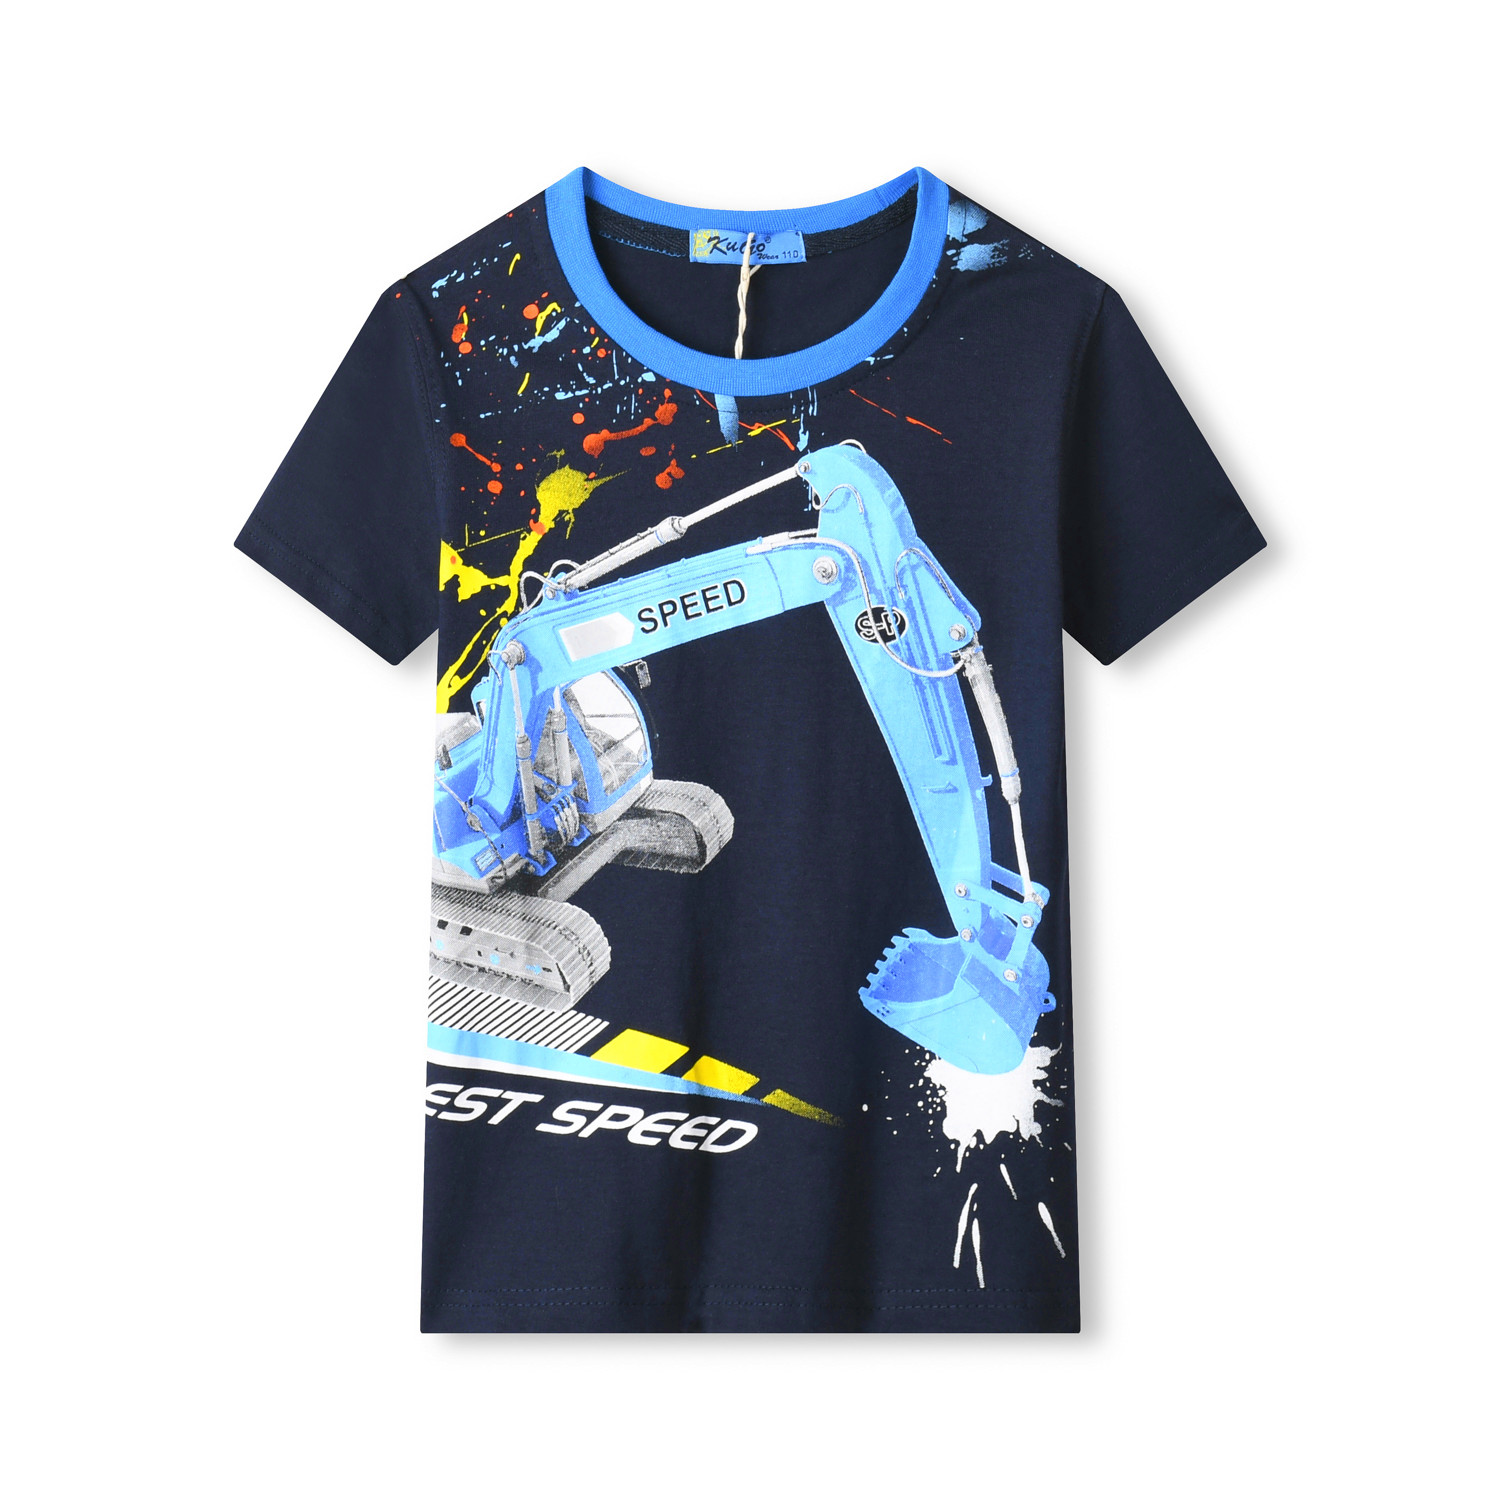 Chlapecké tričko - KUGO TM9201C, tmavě modrá Barva: Modrá tmavě, Velikost: 116